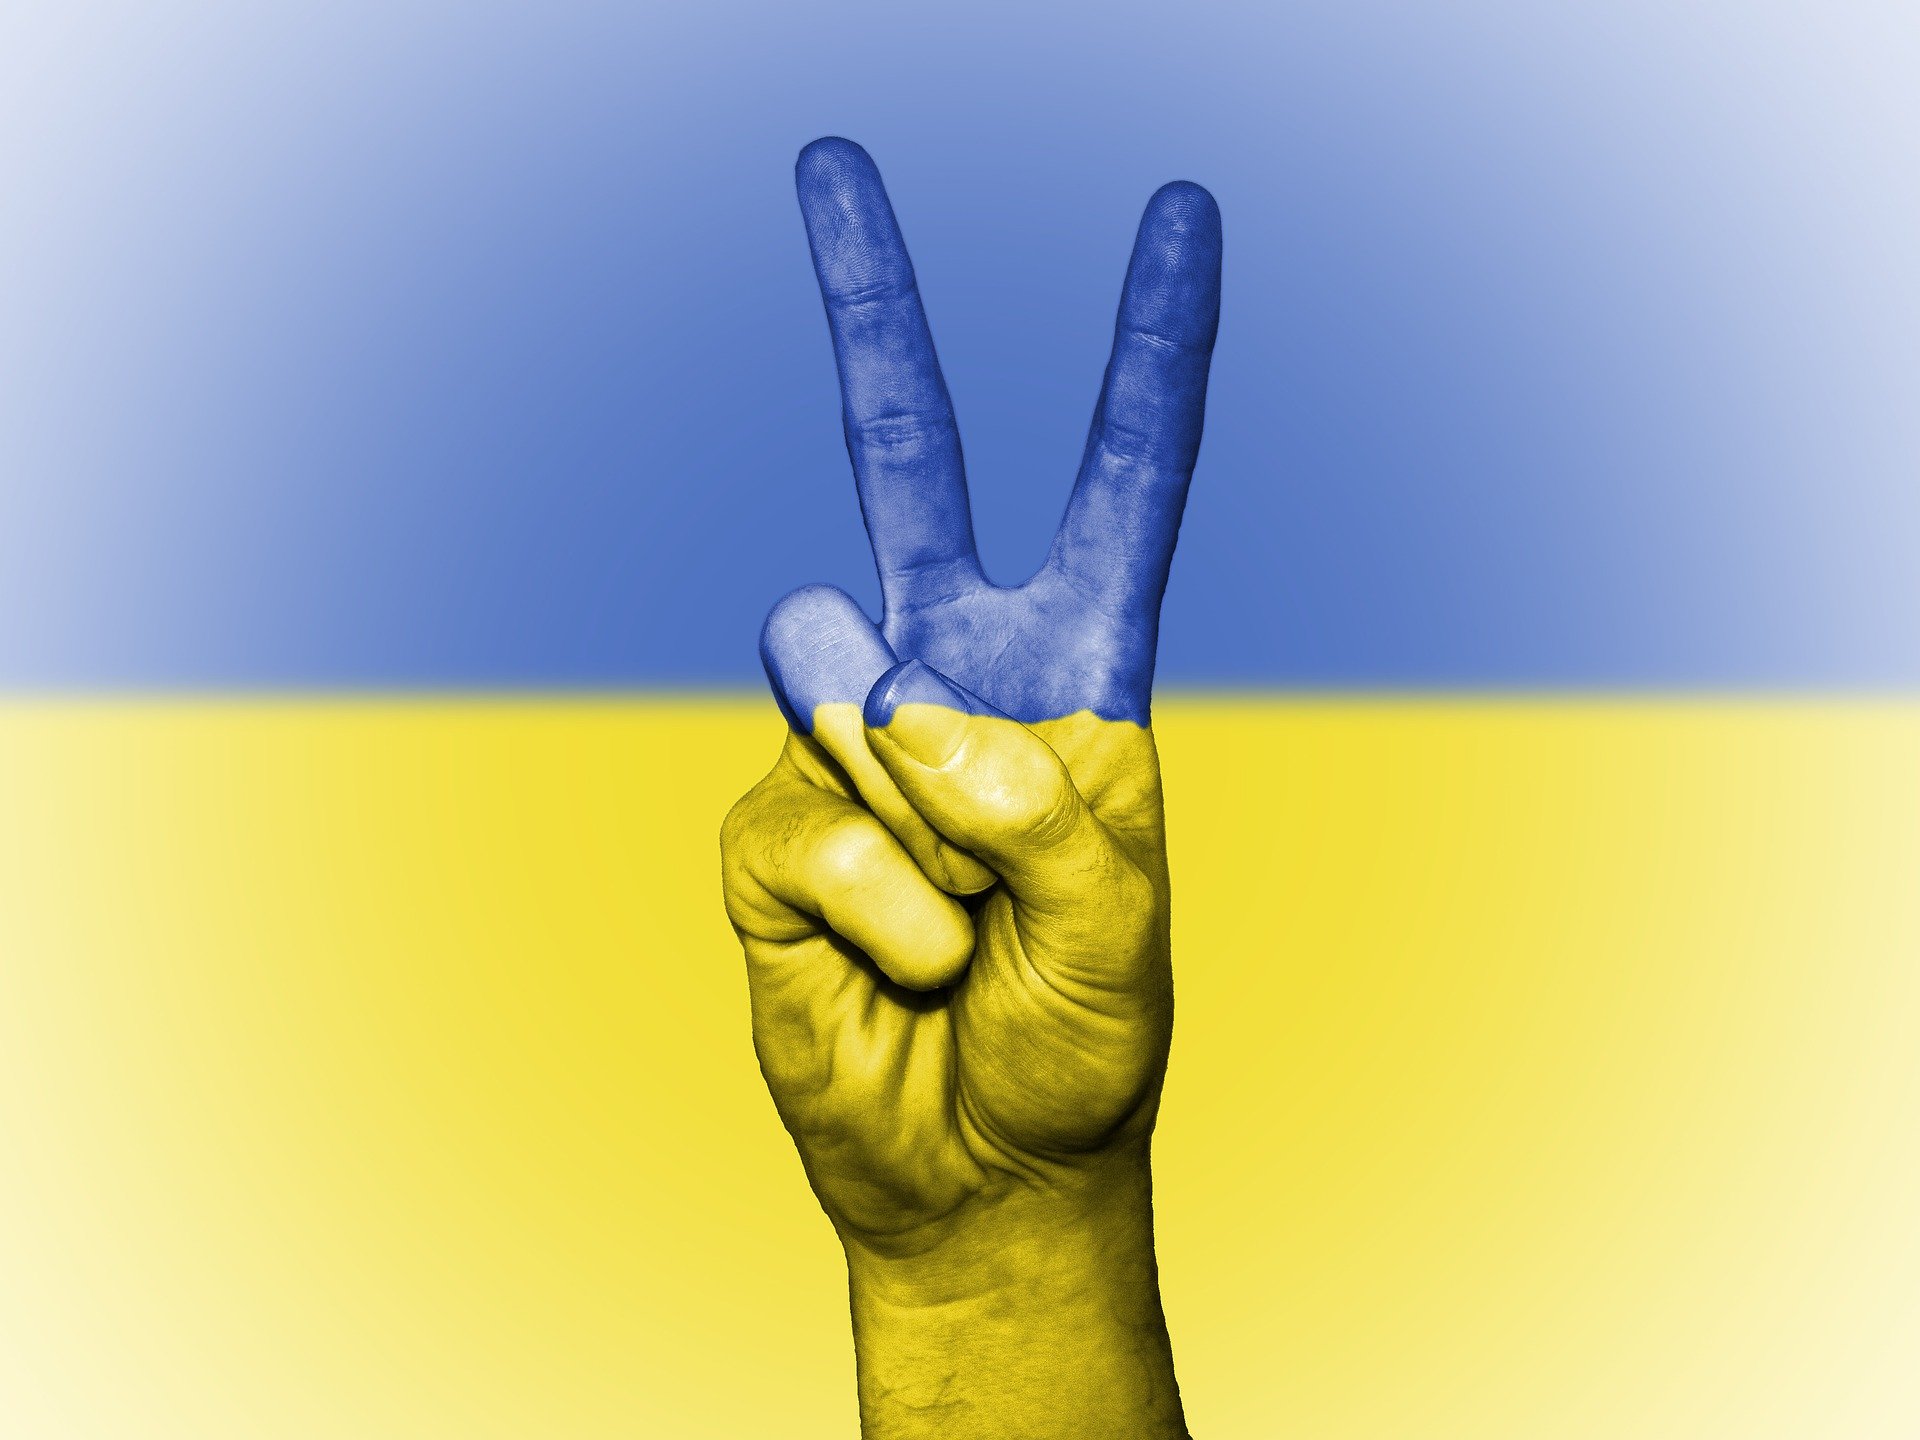 Thinking through Ukraine